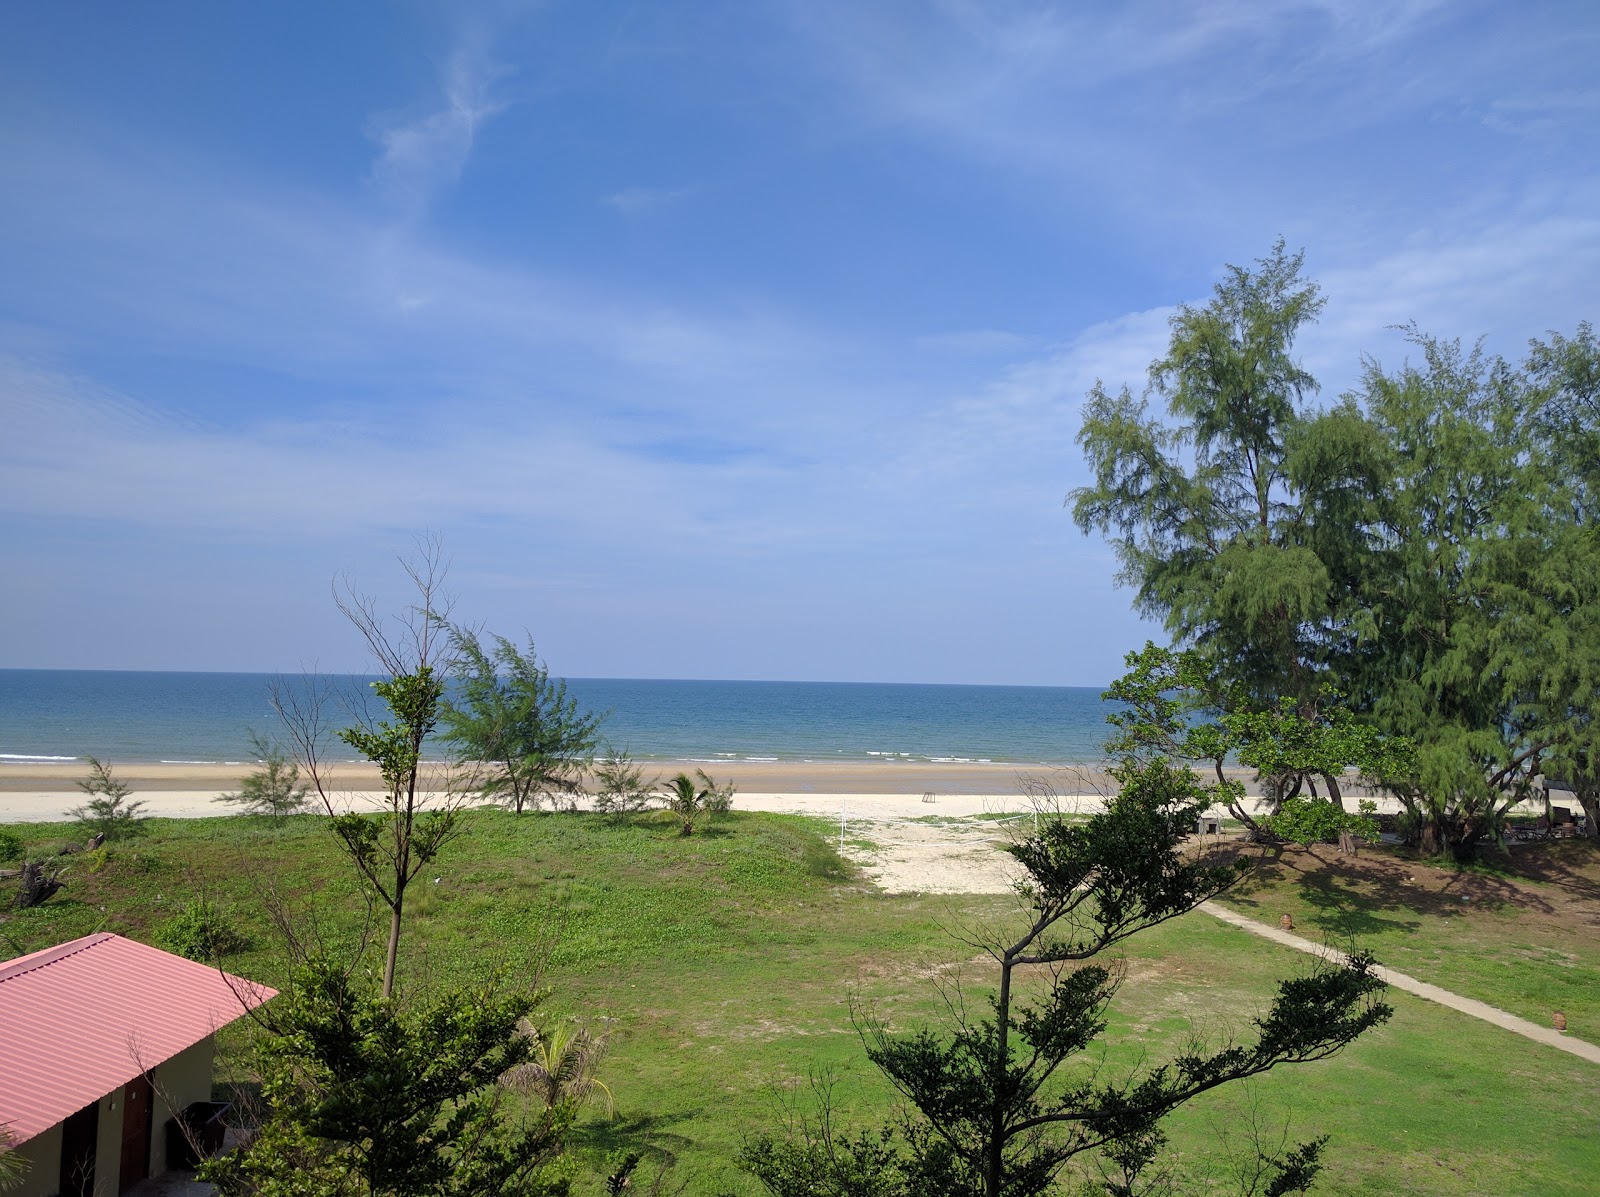 Photo of Gebeng Kampung Beach and the settlement